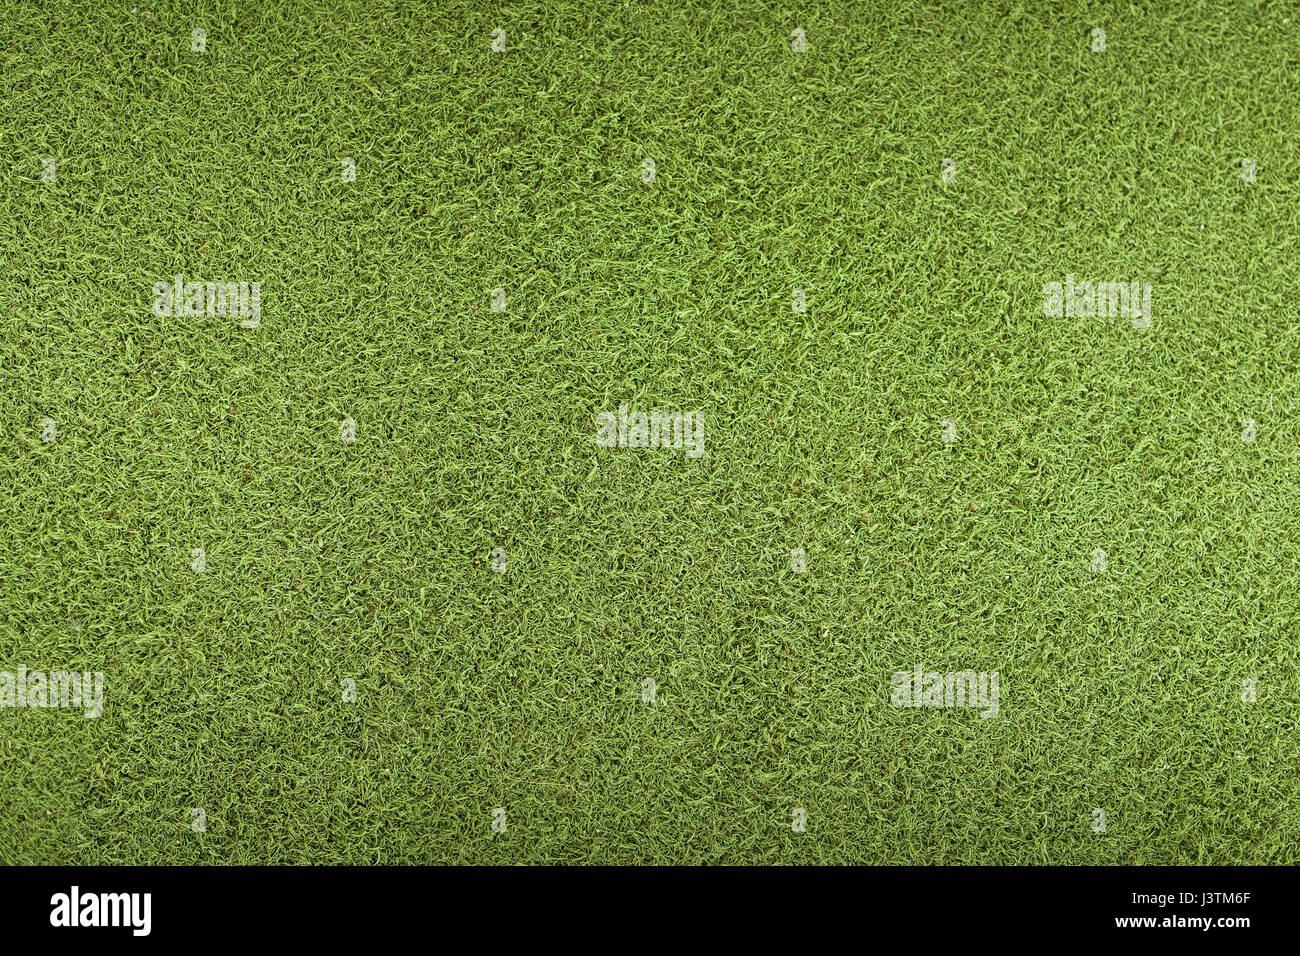 Textura verde césped artificial Foto de stock